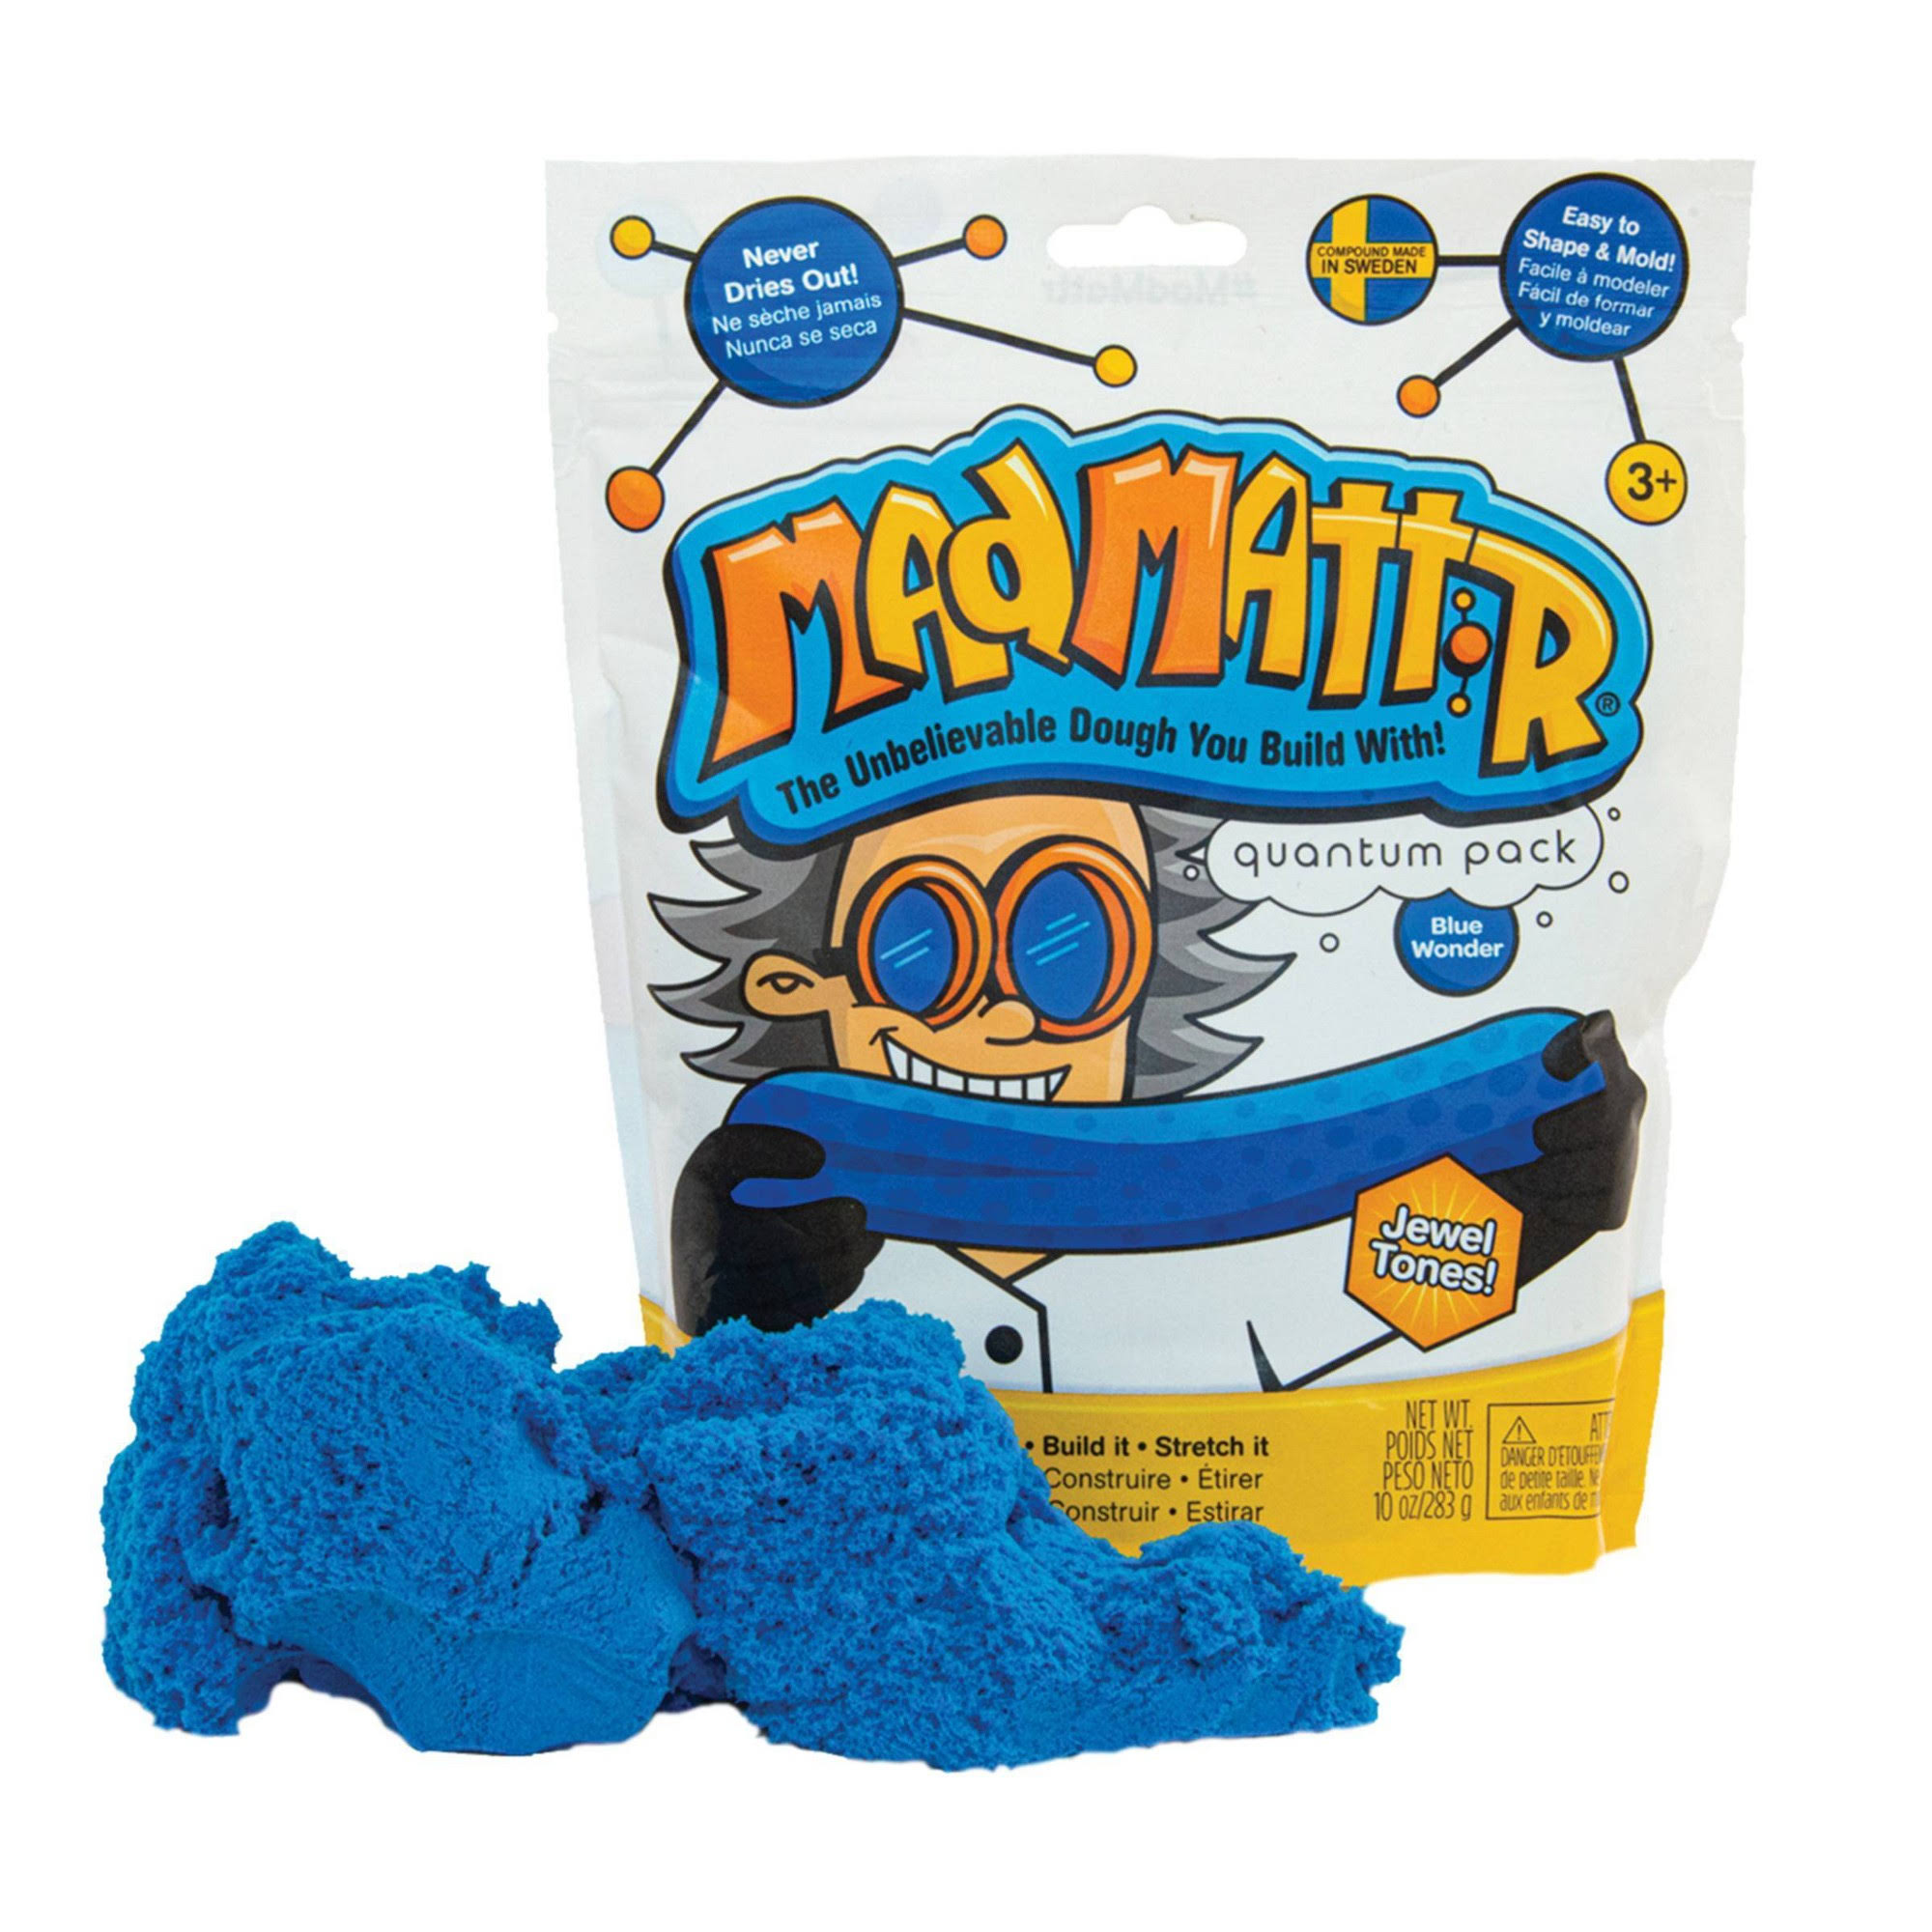 Mad Mattr Quantum Pack - 10oz Blue Wonder